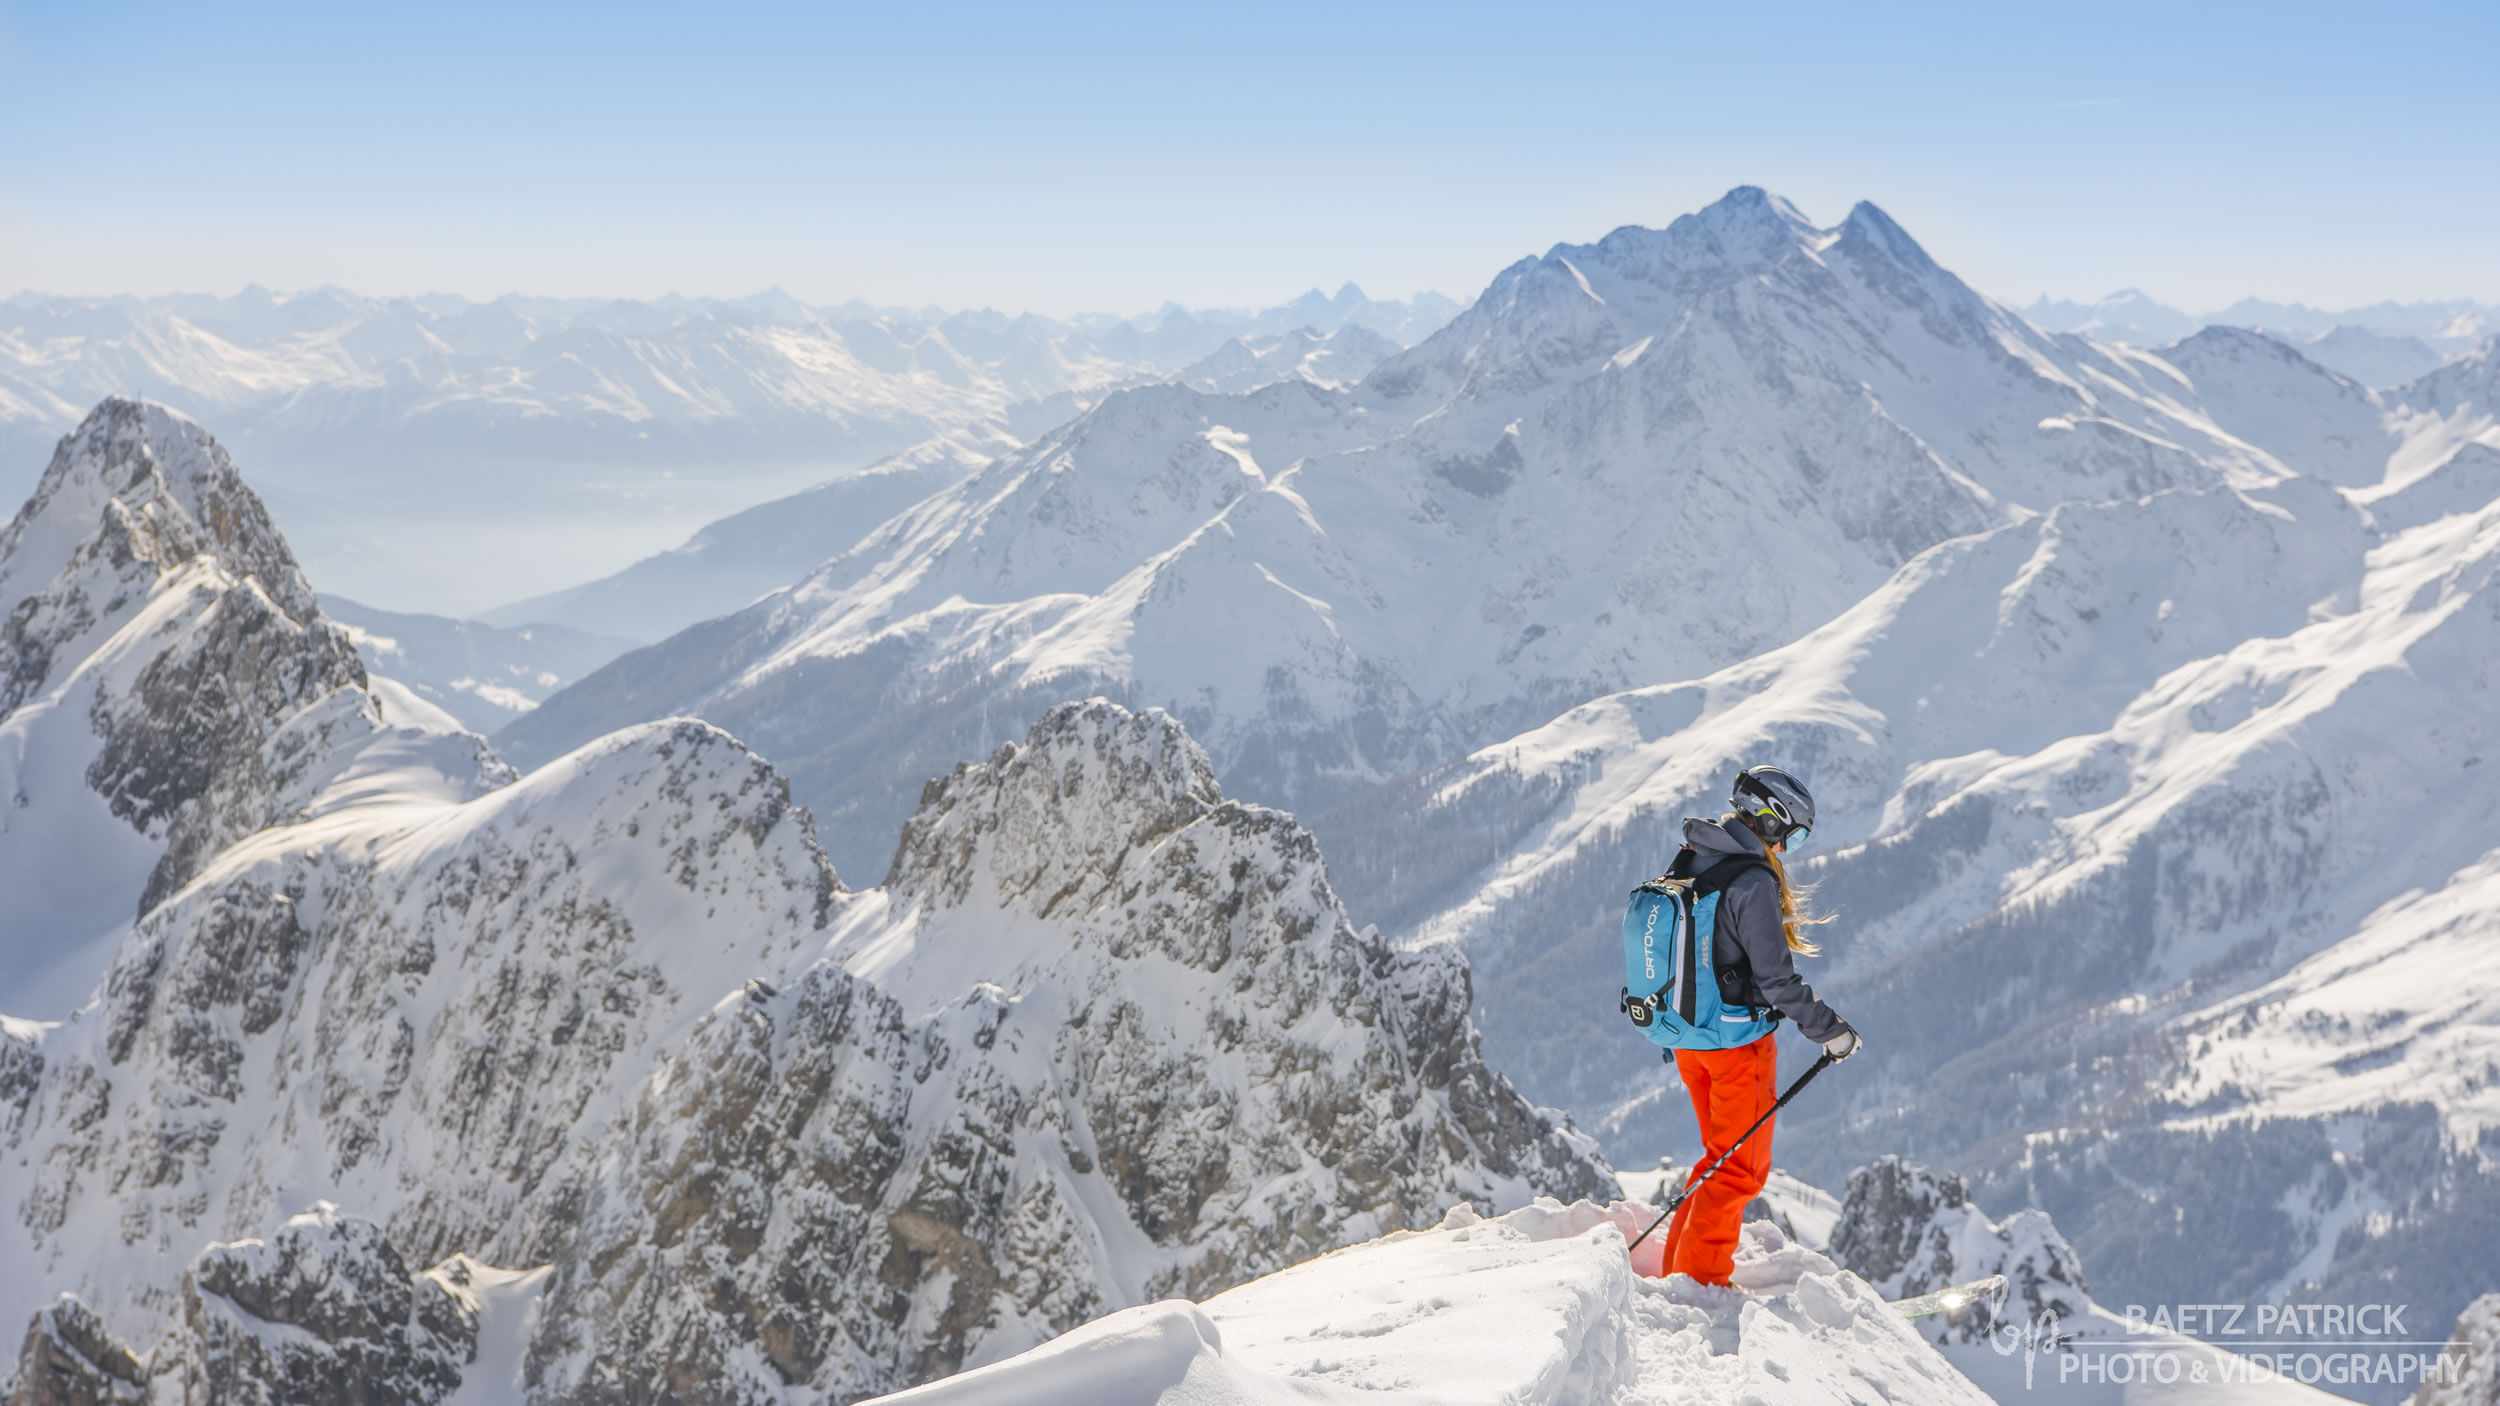 Arlberg powder alert: Five lift-accessed deep snow runs